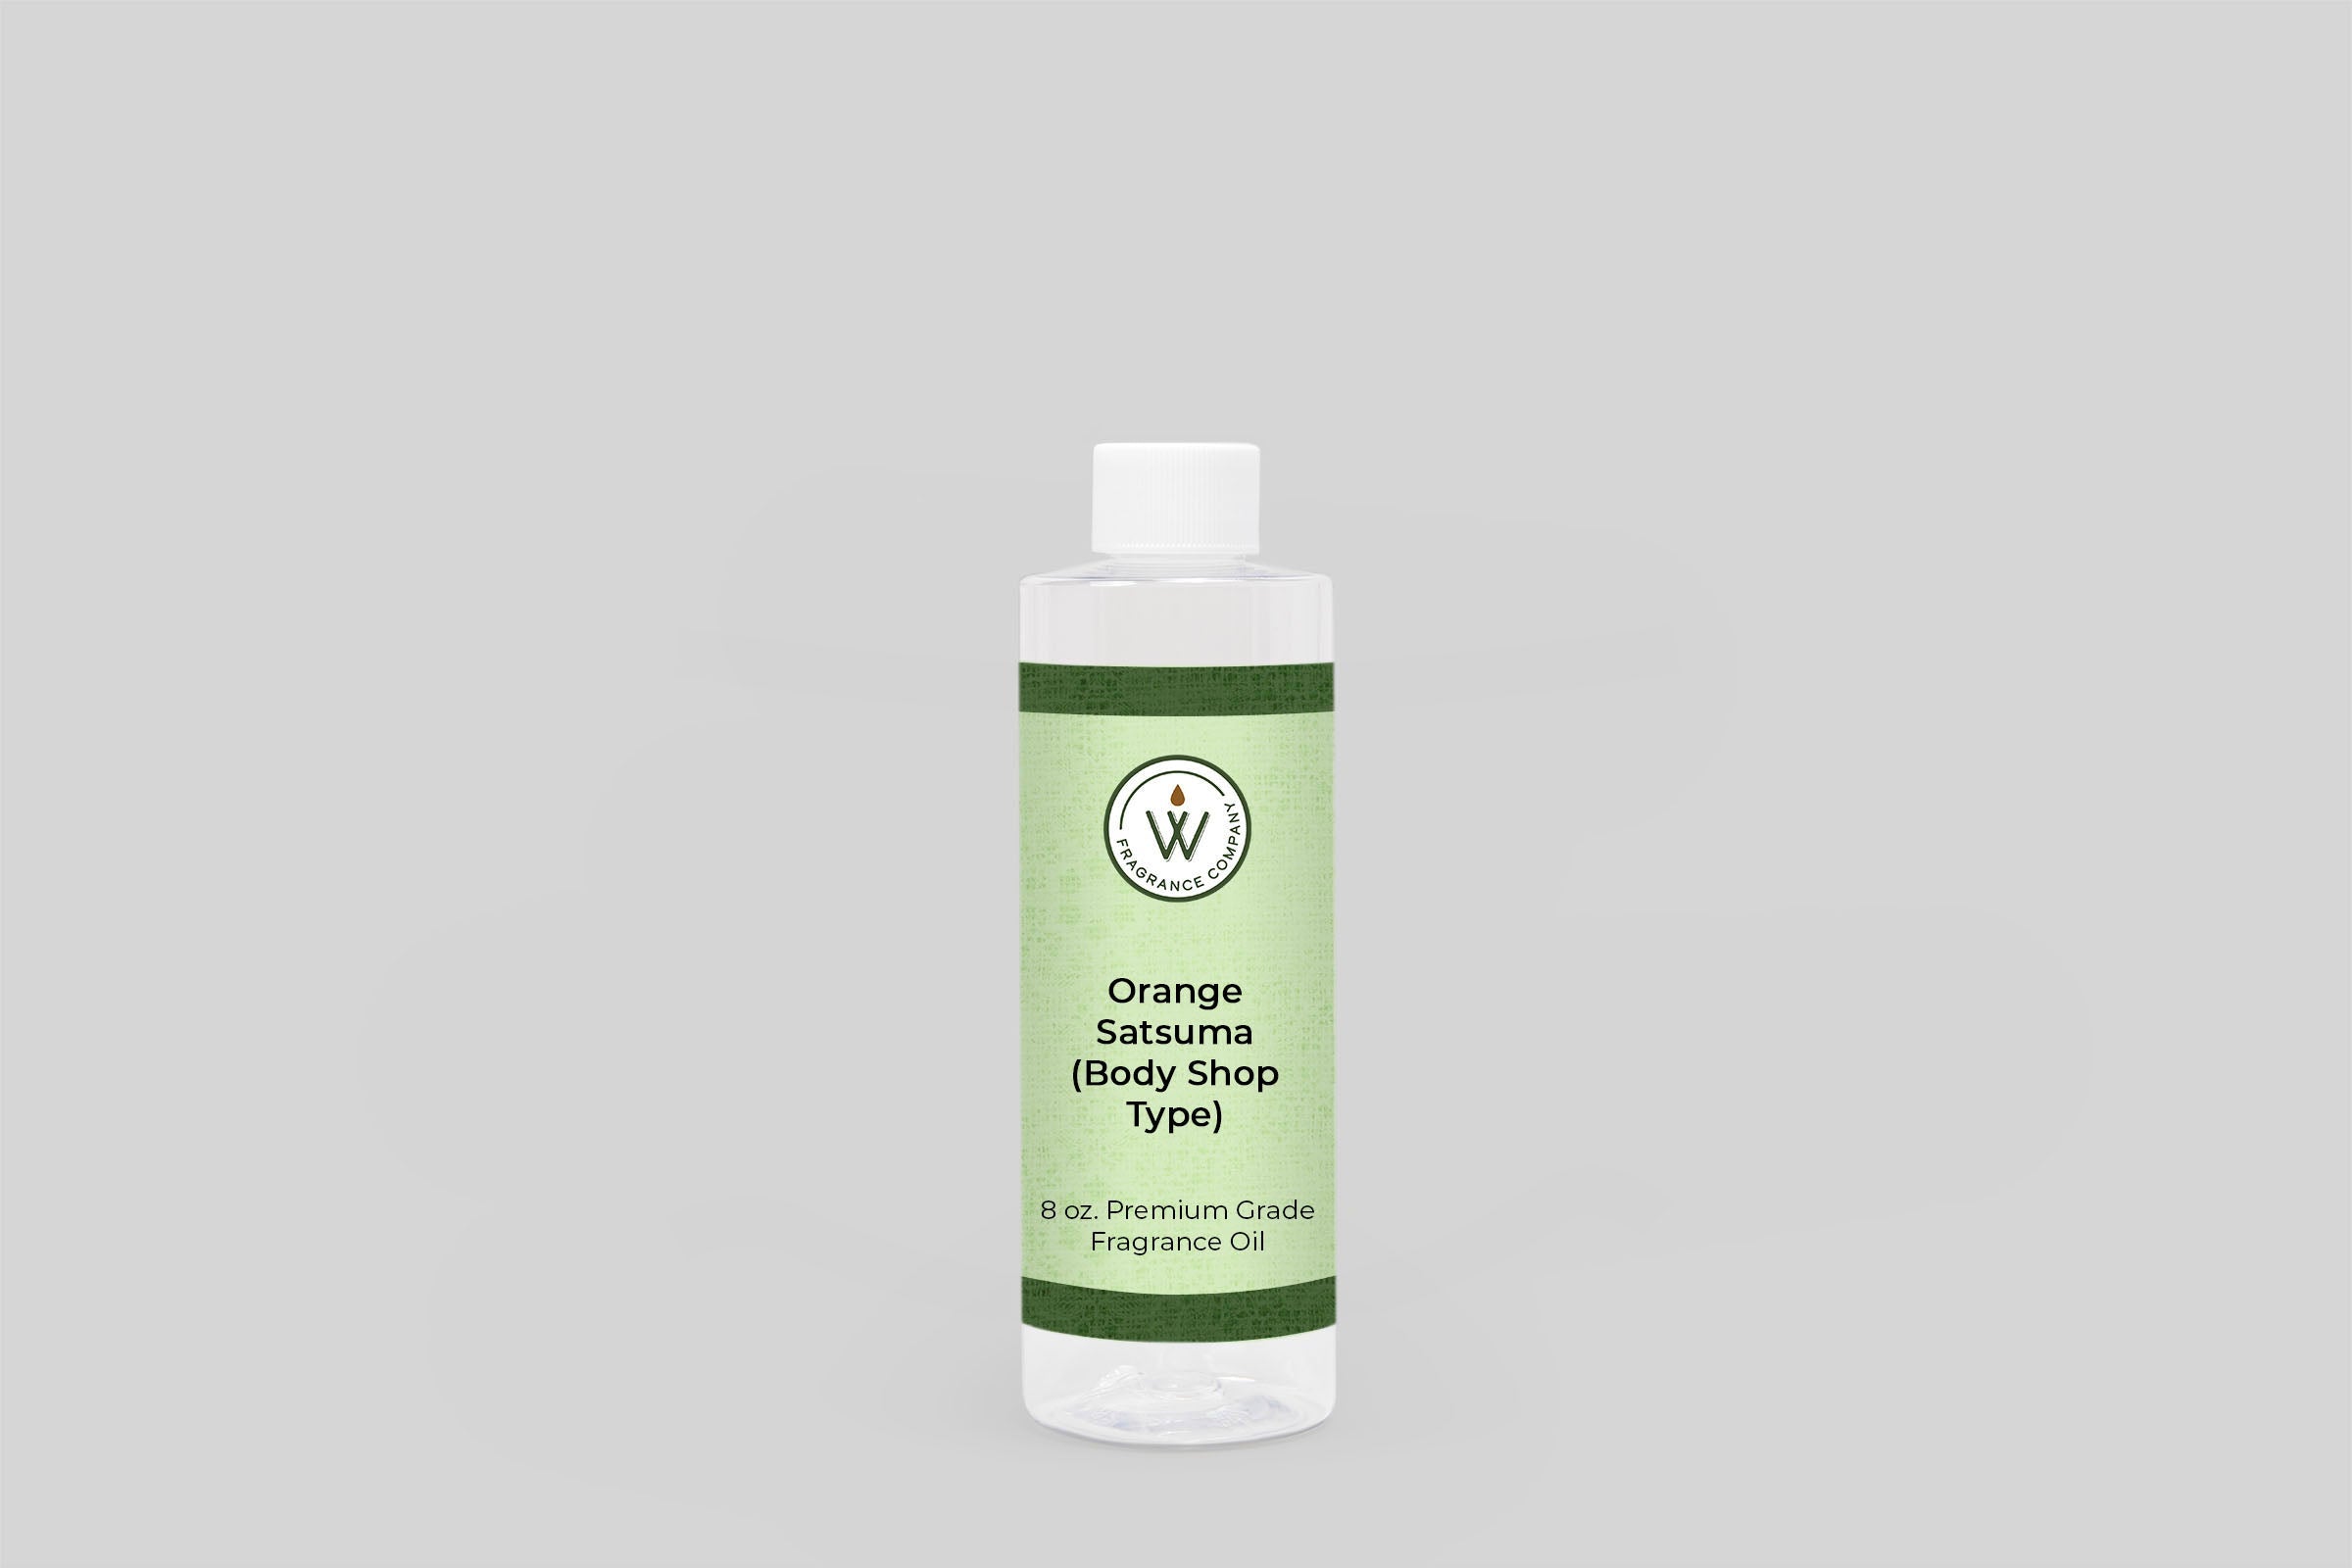 Orange Satsuma (Body Shop Type) Fragrance Oil